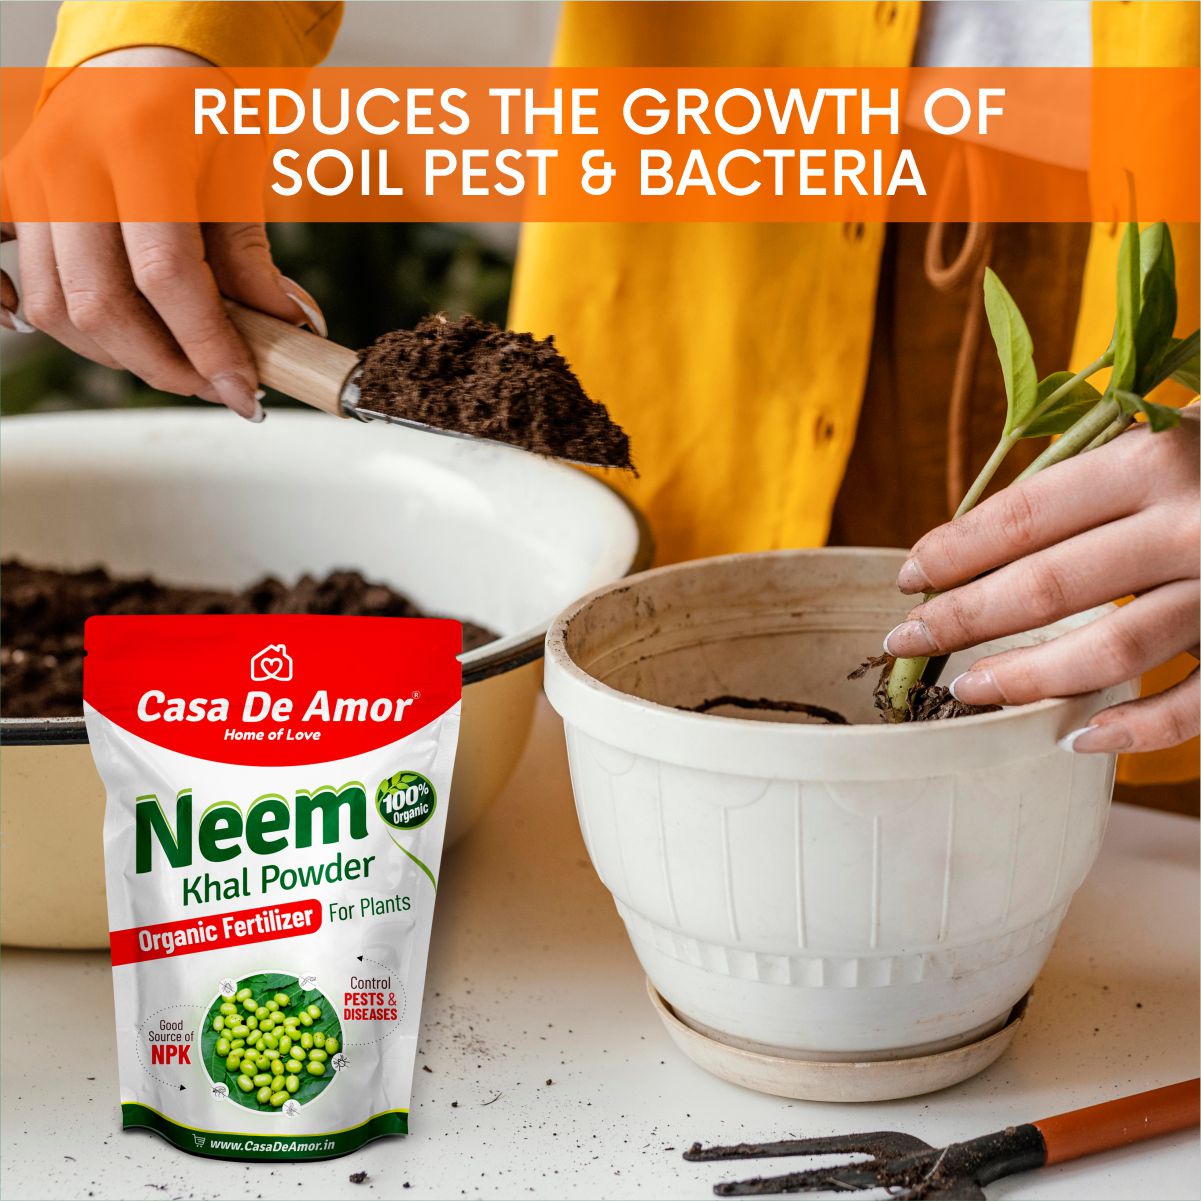 Casa De Amor Neem Cake Powder Organic Fertilizer and Pest Repellent for Plants (Also Known Neem Khal Powder)